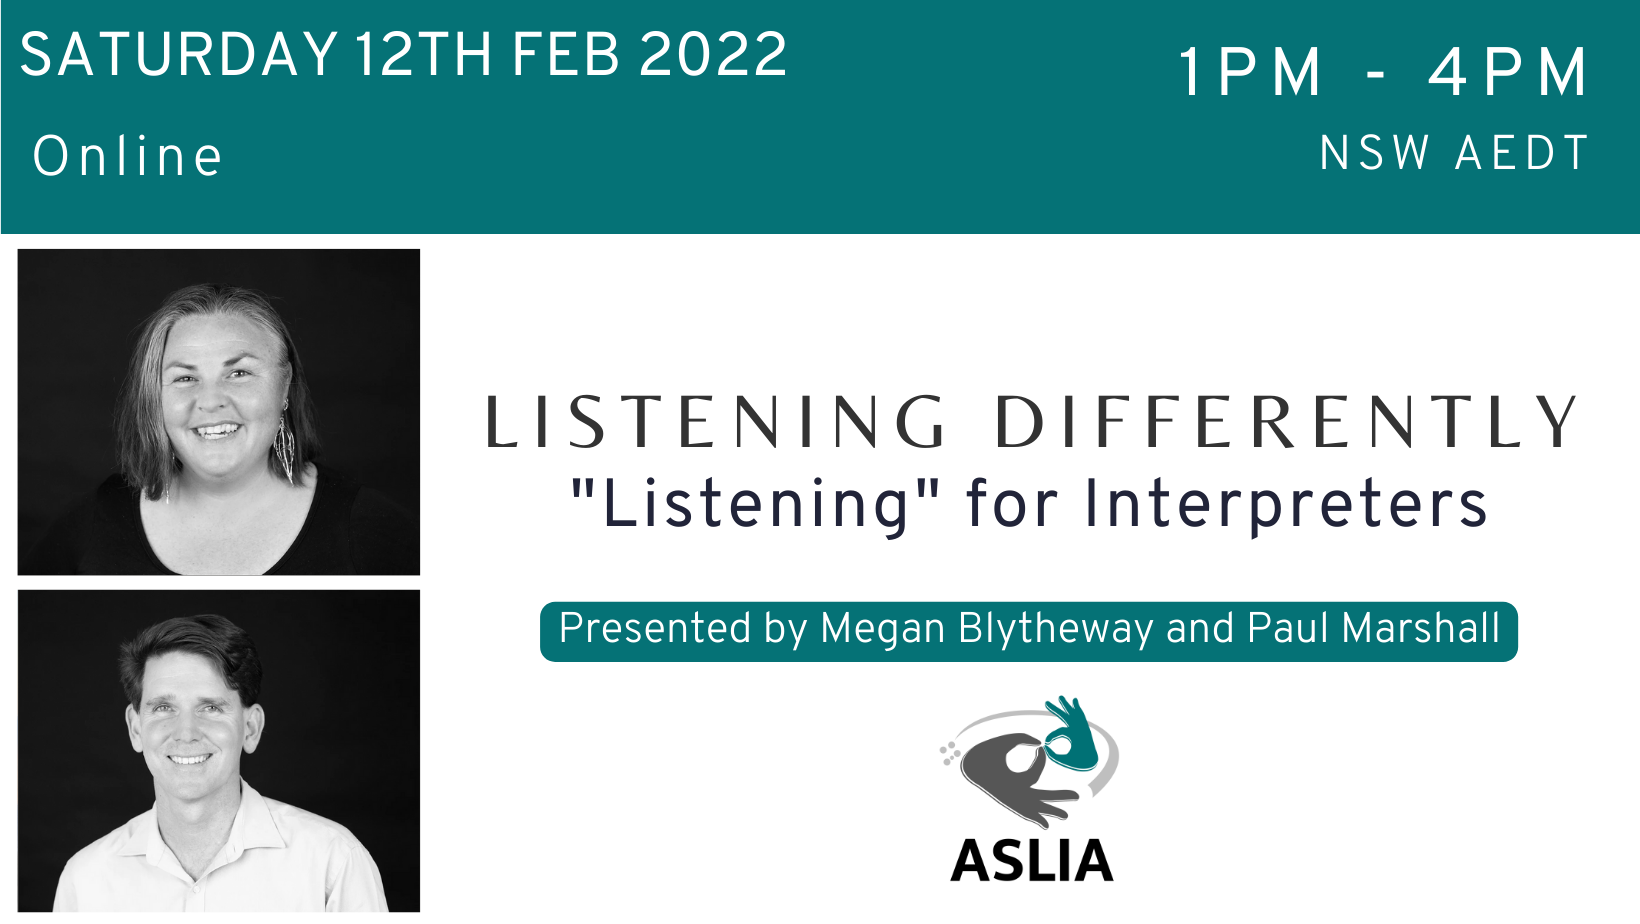 LISTENING DIFFERENTLY – “Listening” for Interpreters